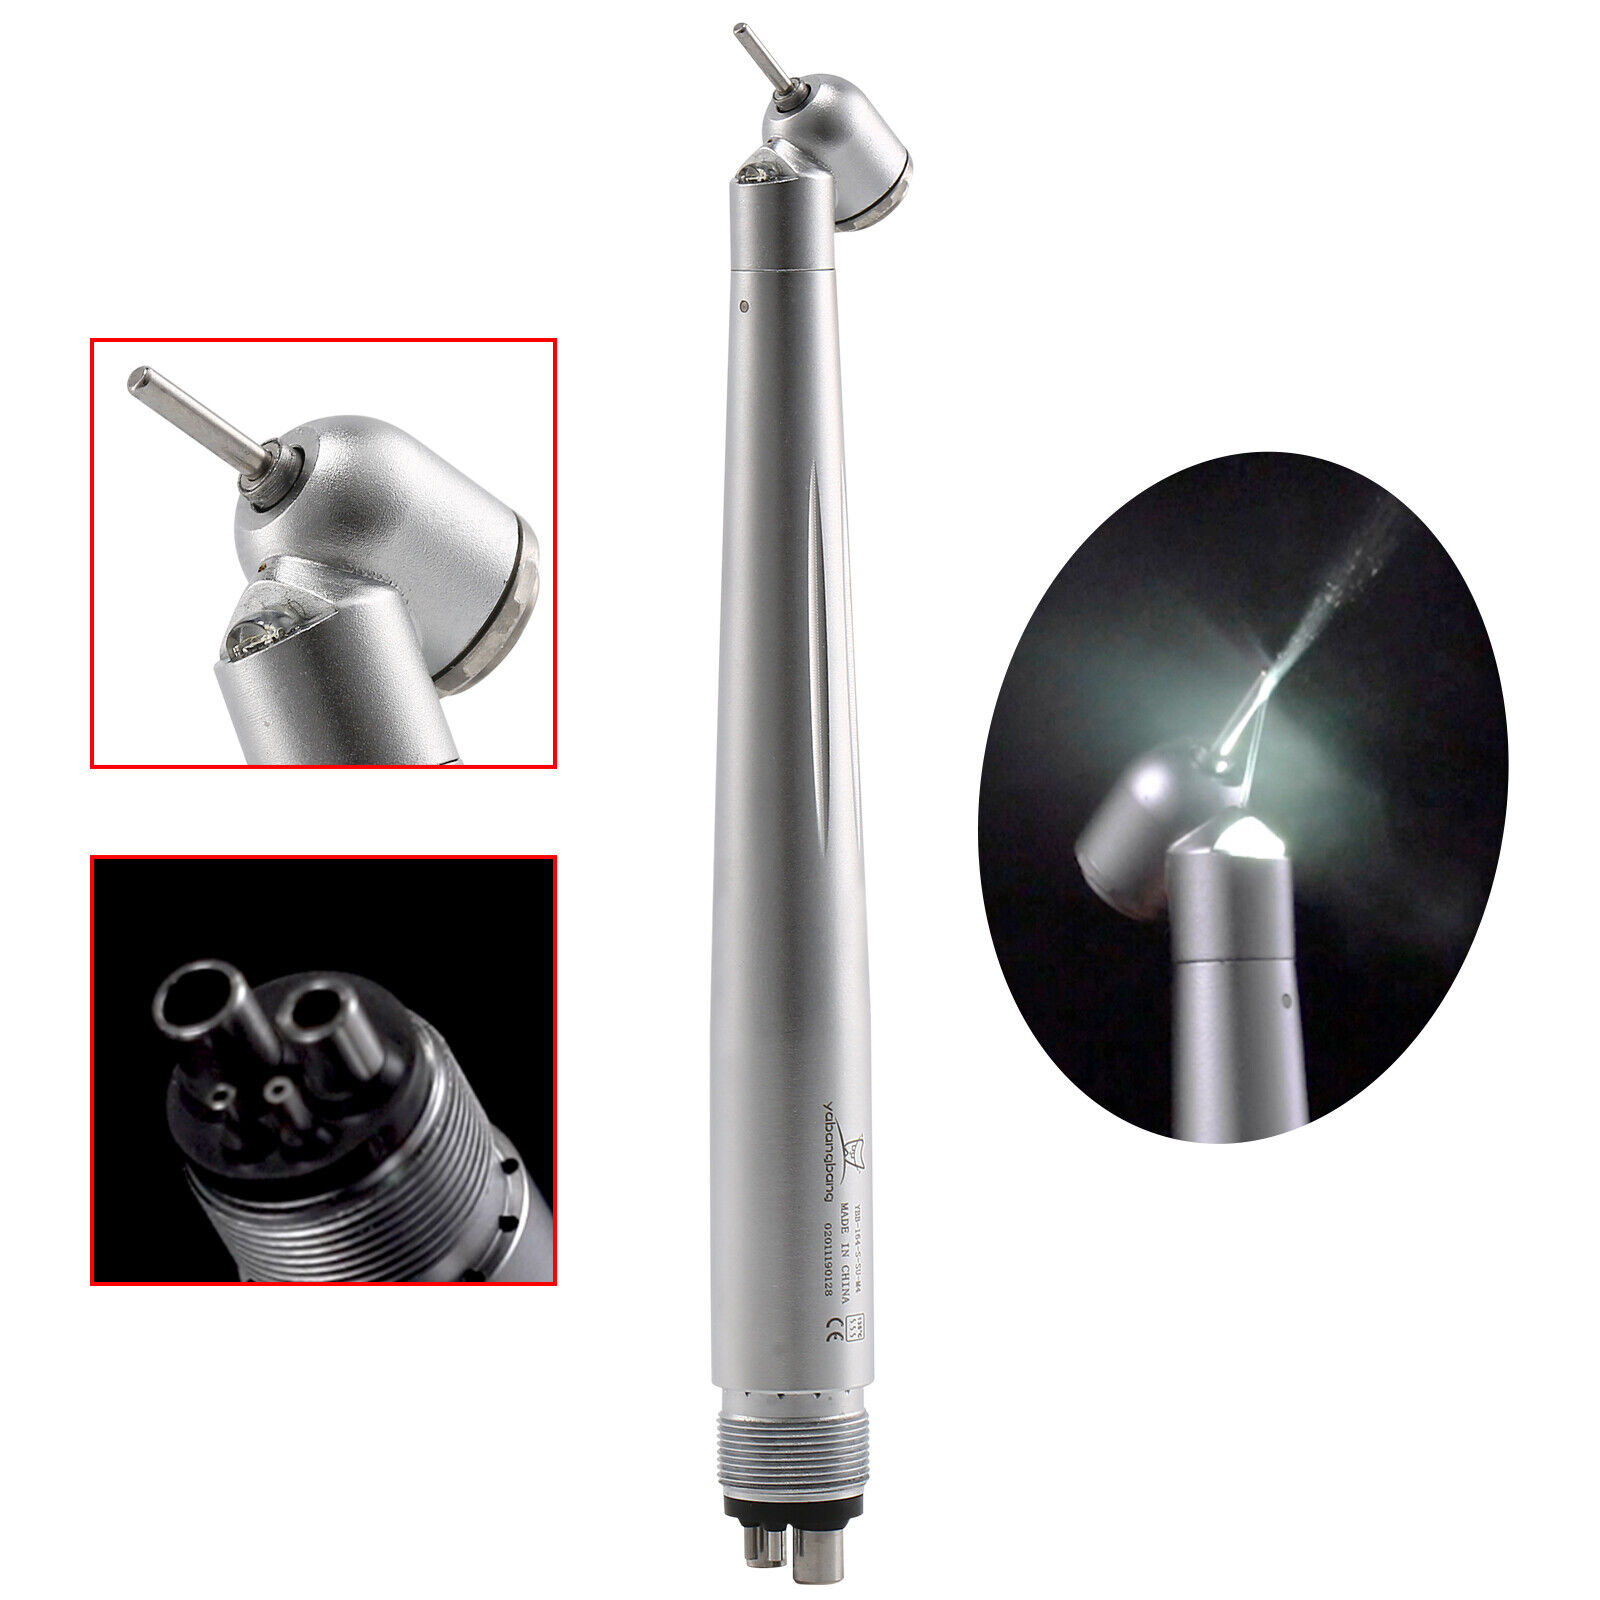 1-10 NSK Style Turbina Dental (LED) 45 Degree Surgical High Speed Handpiece Push